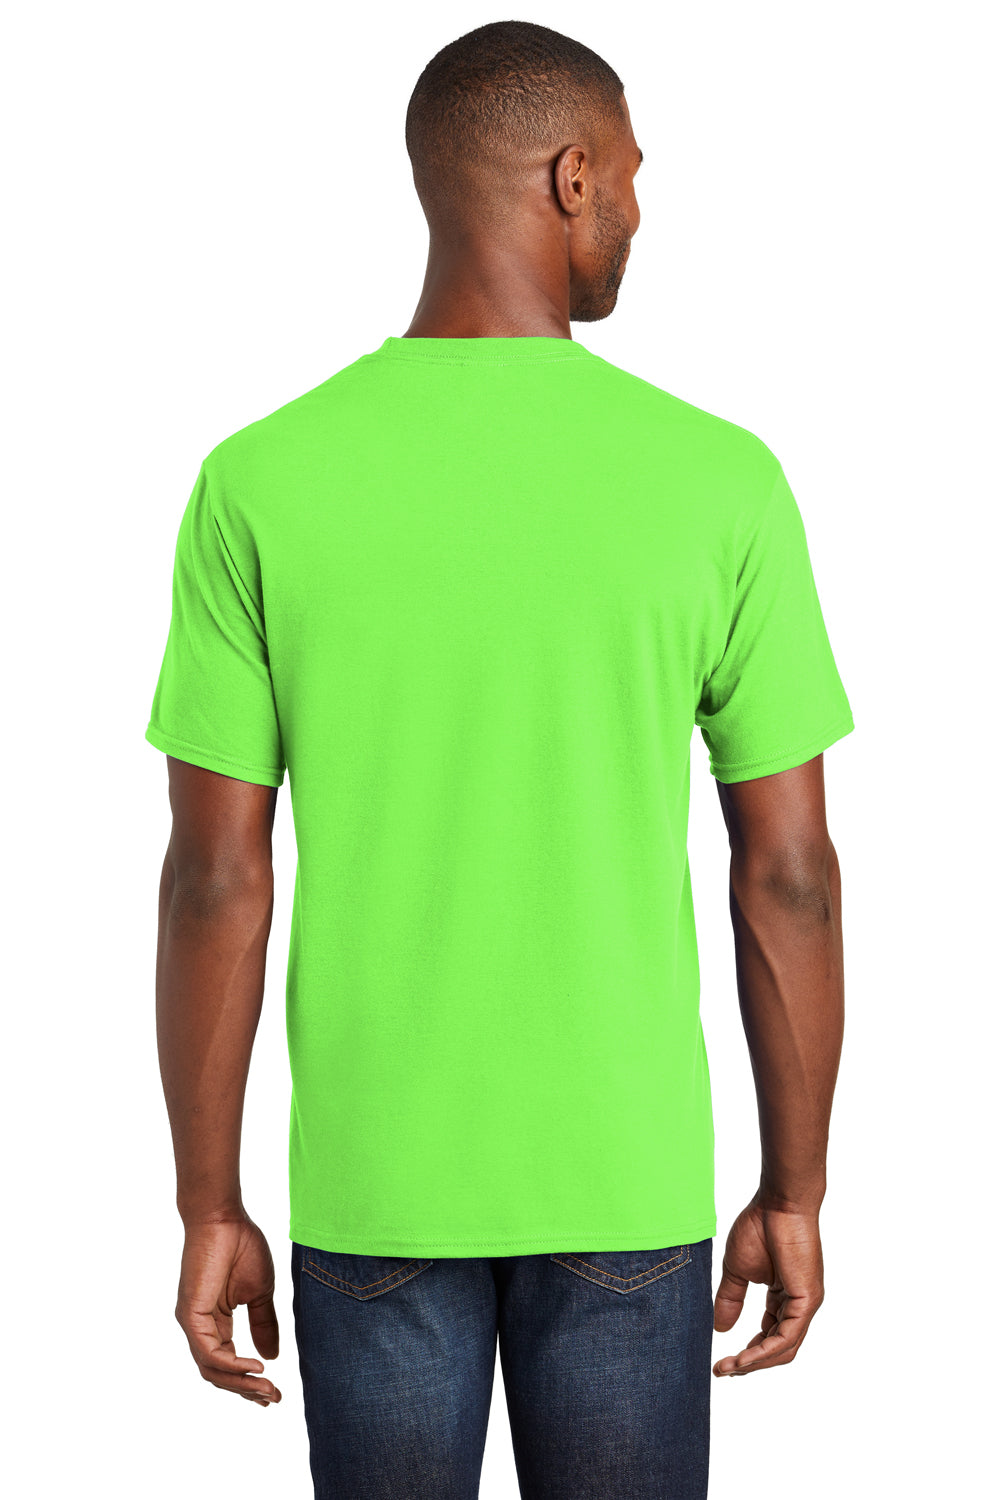 Port & Company PC450 Mens Fan Favorite Short Sleeve Crewneck T-Shirt Flash Green Back